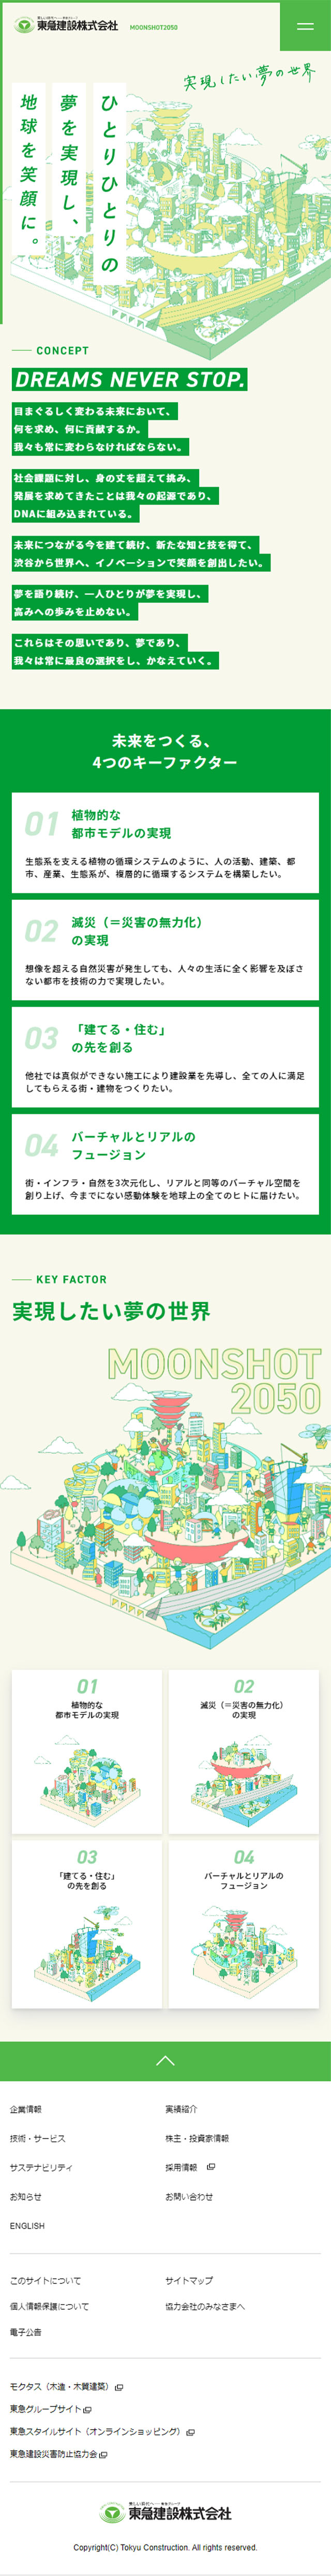 MOONSHOT 2050_sp_1